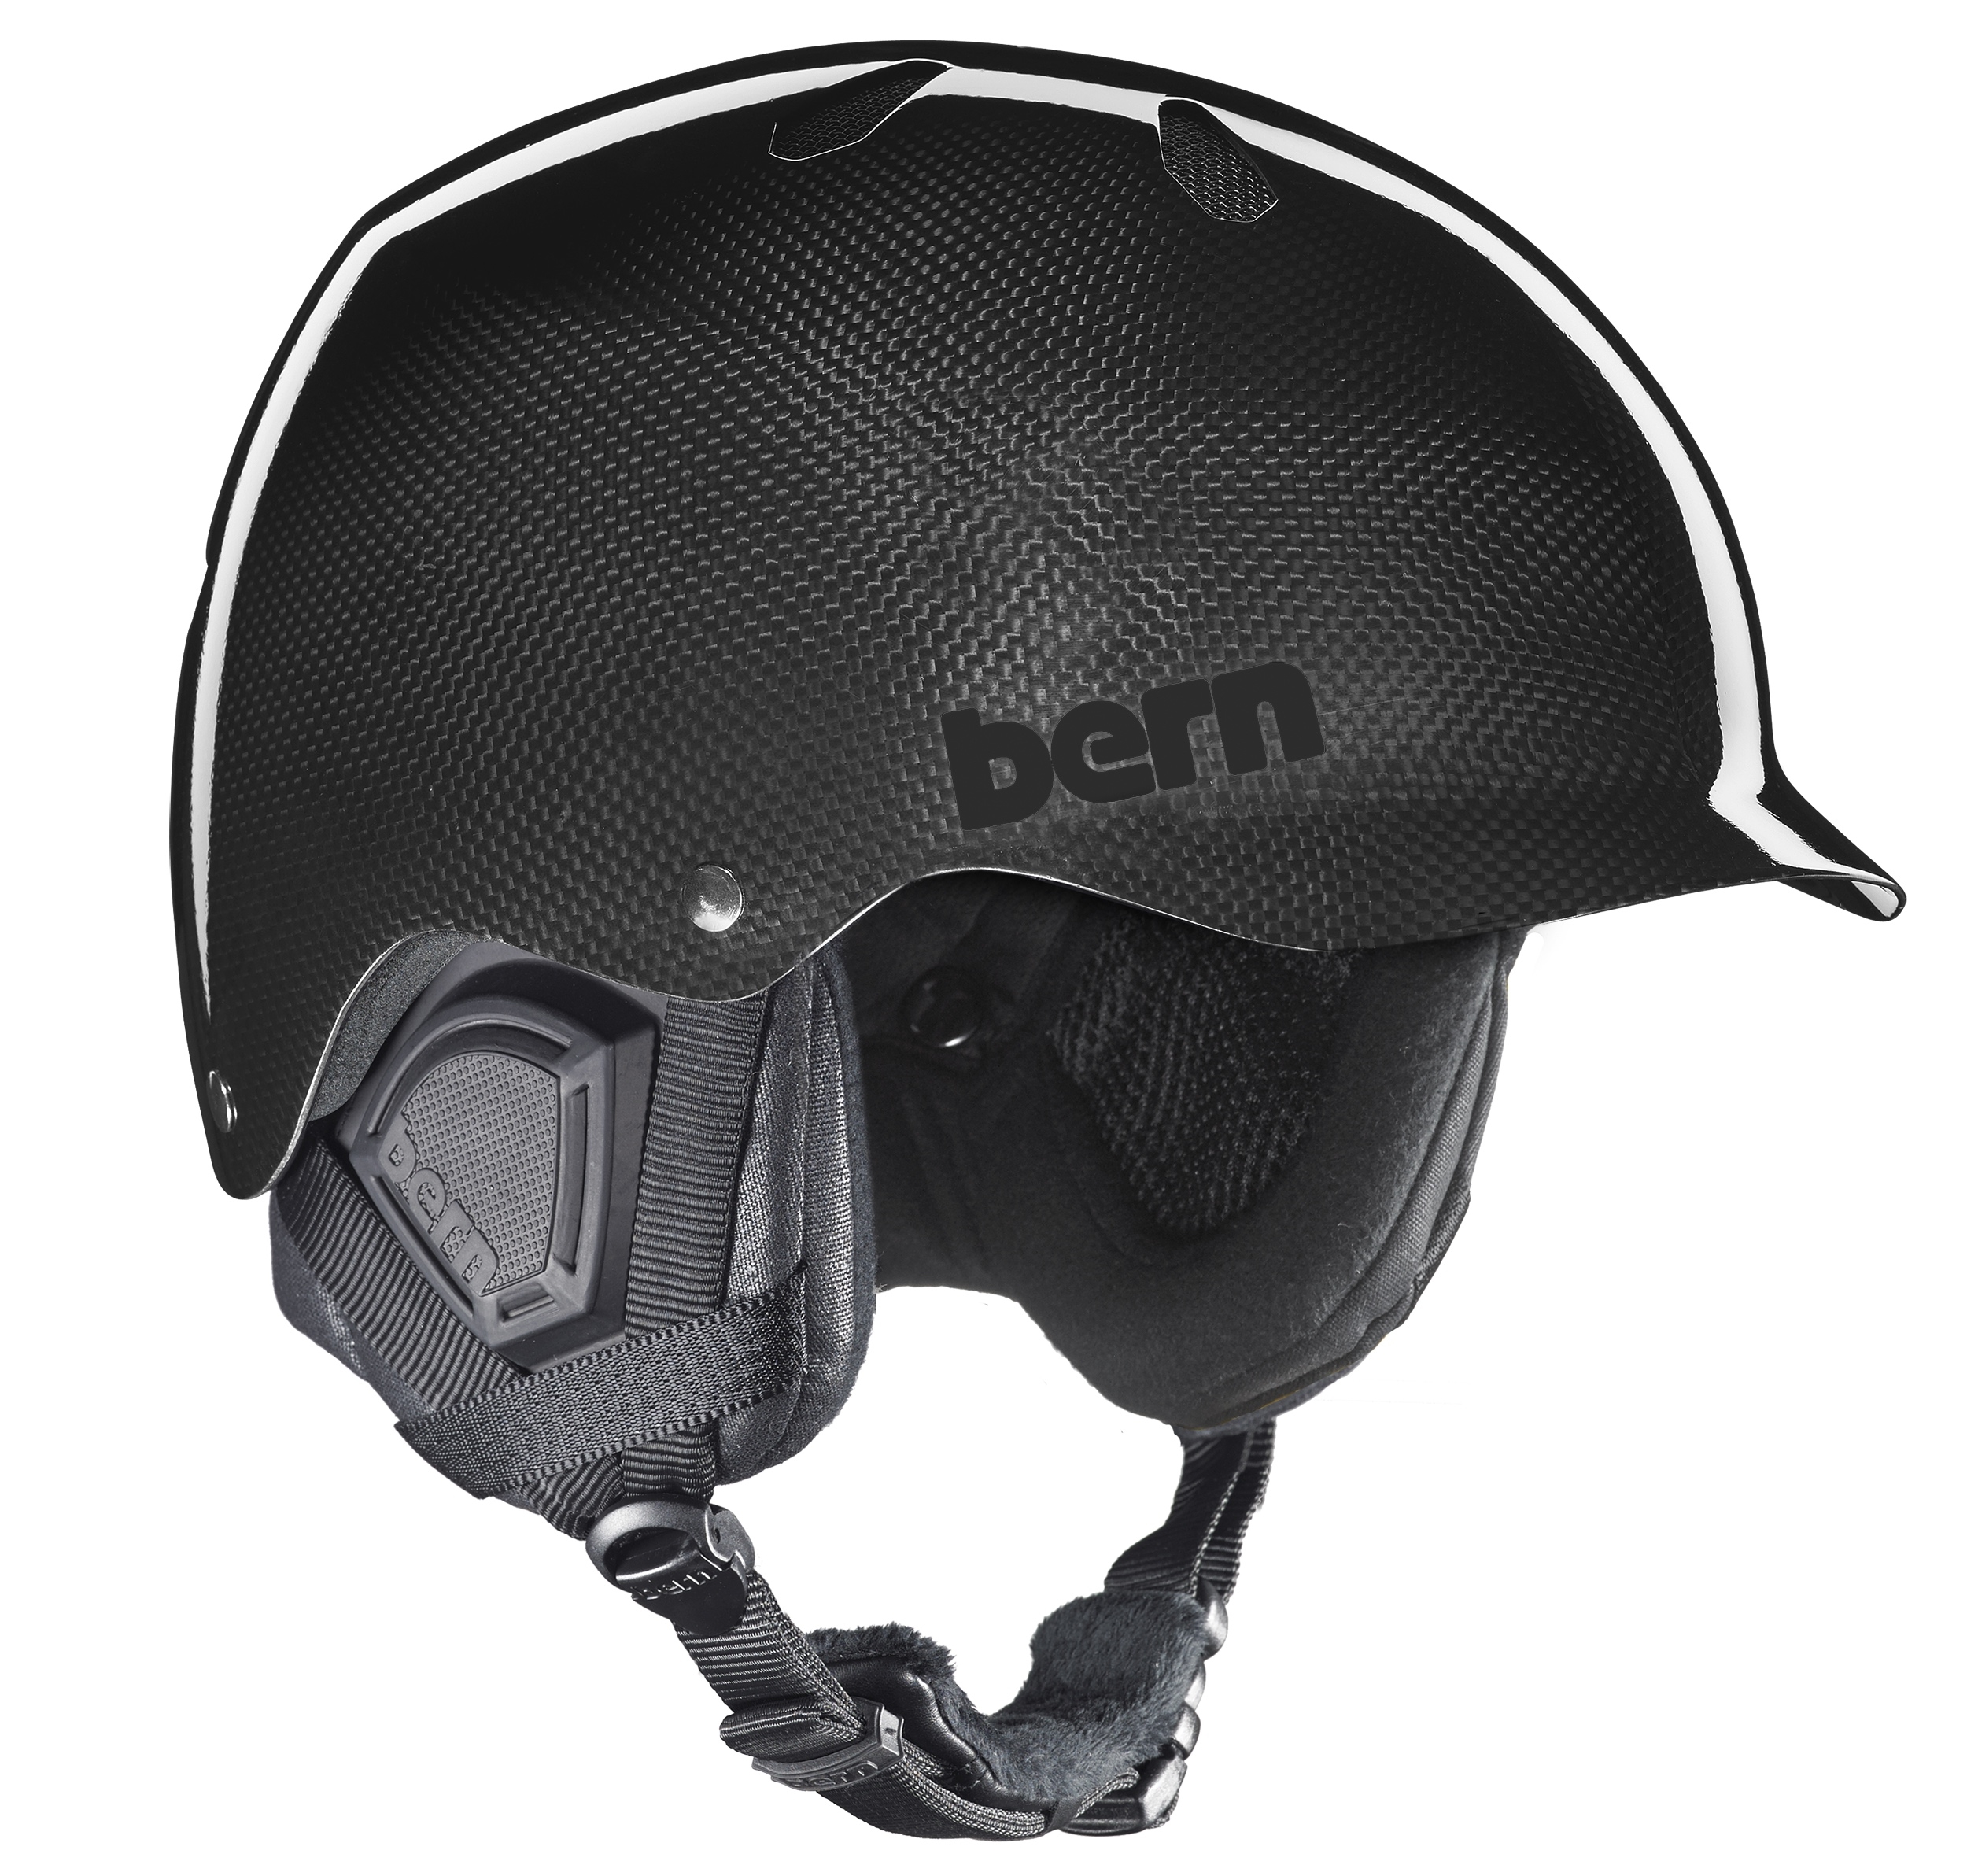 Bern Watts Carbon Helmet, $250